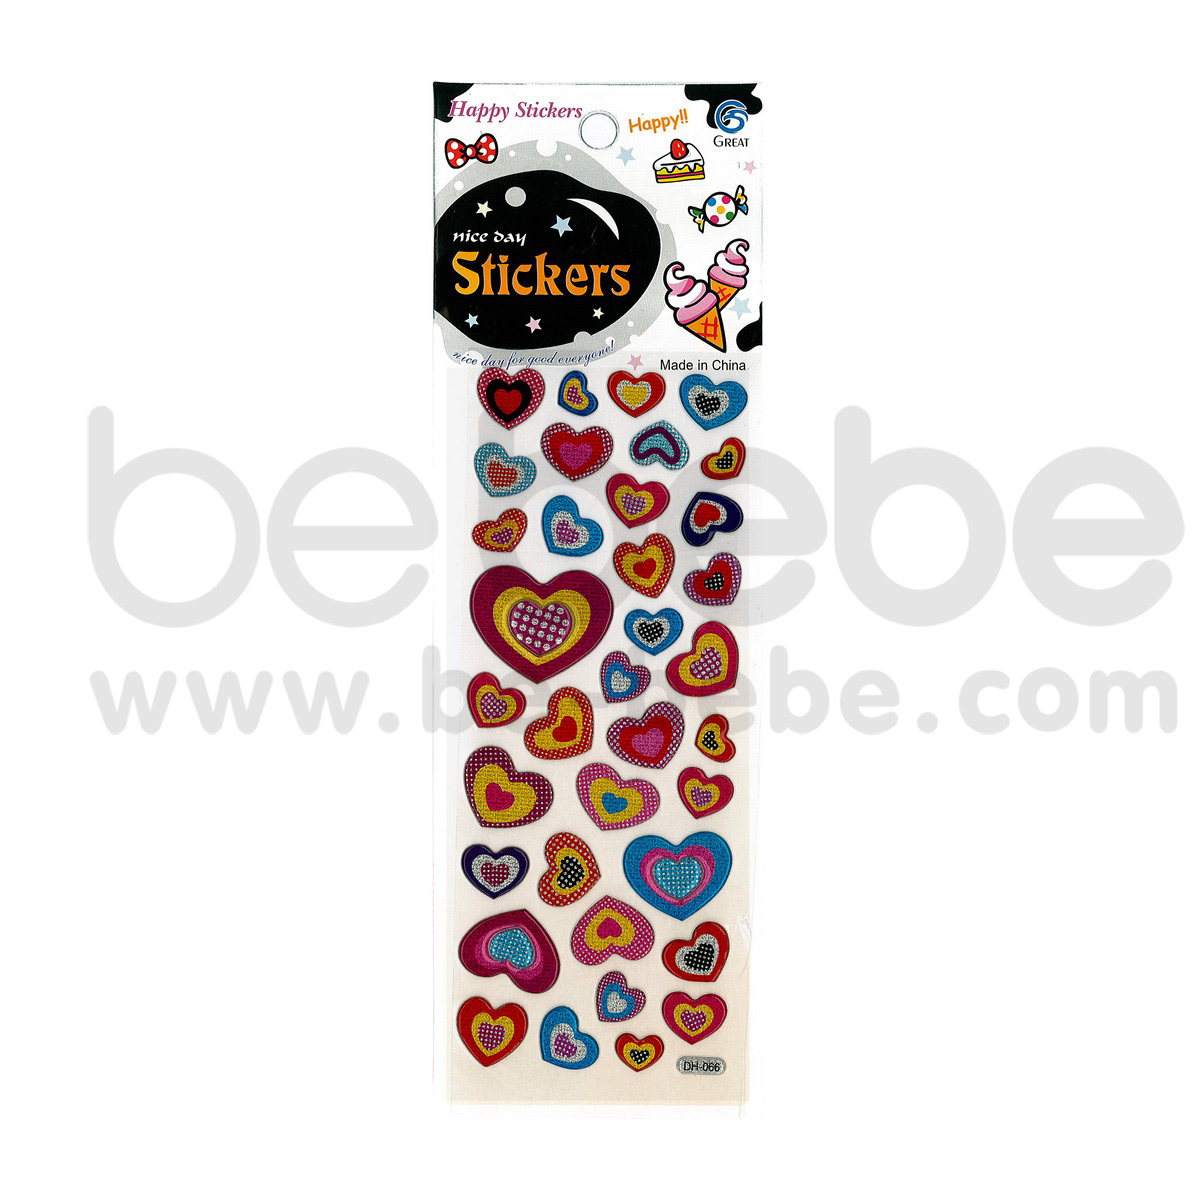 be bebe : Puffy Sticker (7x17cm.) / DH-066